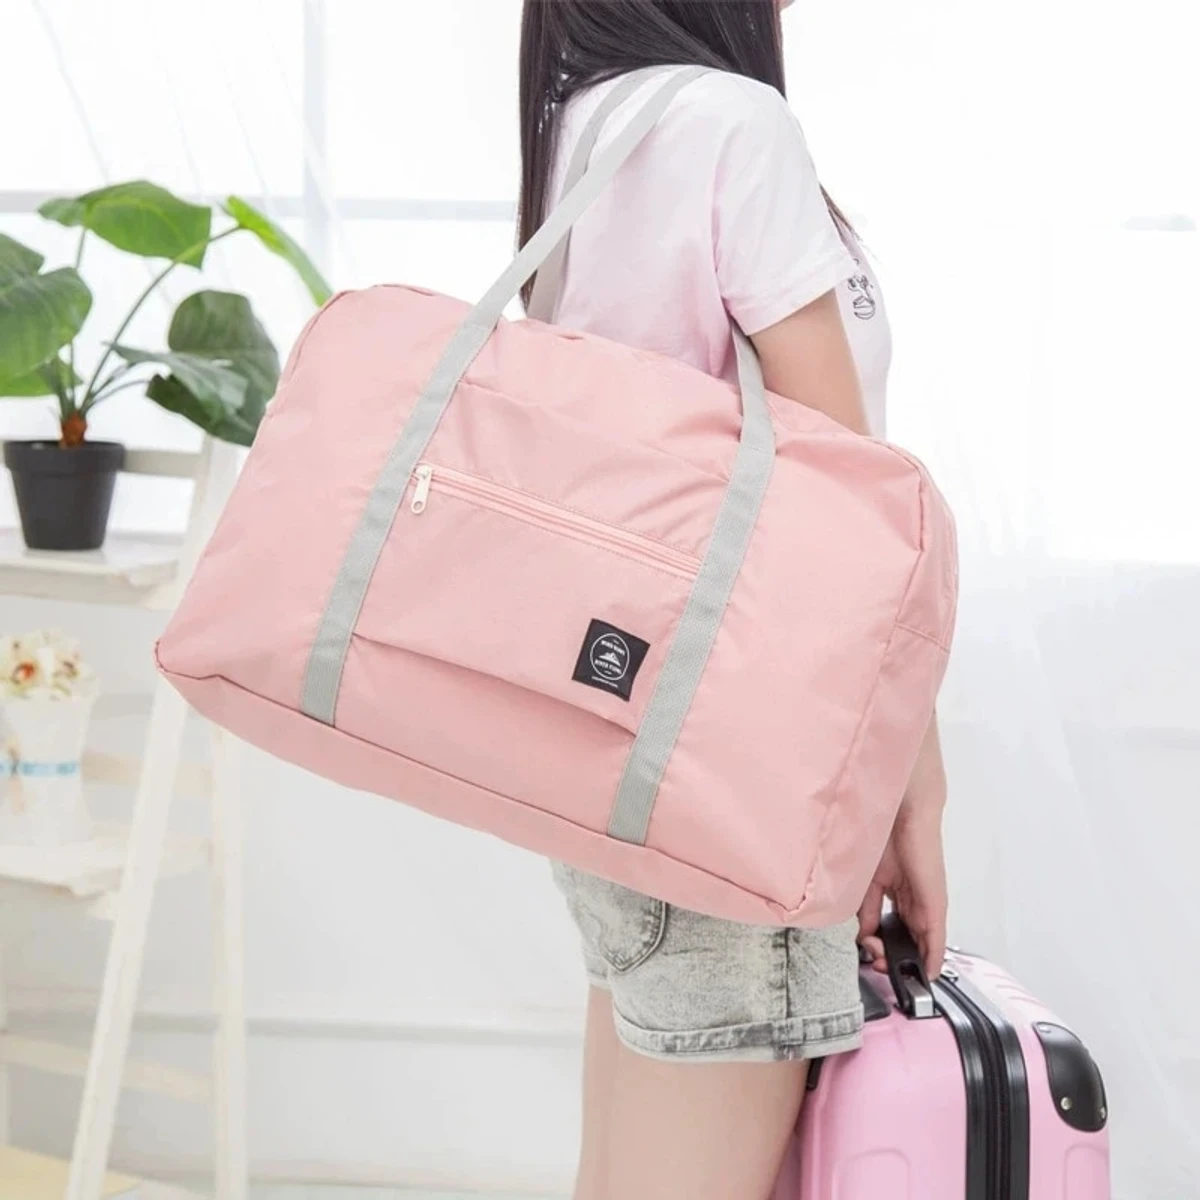 Foldable Travel Bags Unisex Large Capacity Luggage WaterProof Handbags